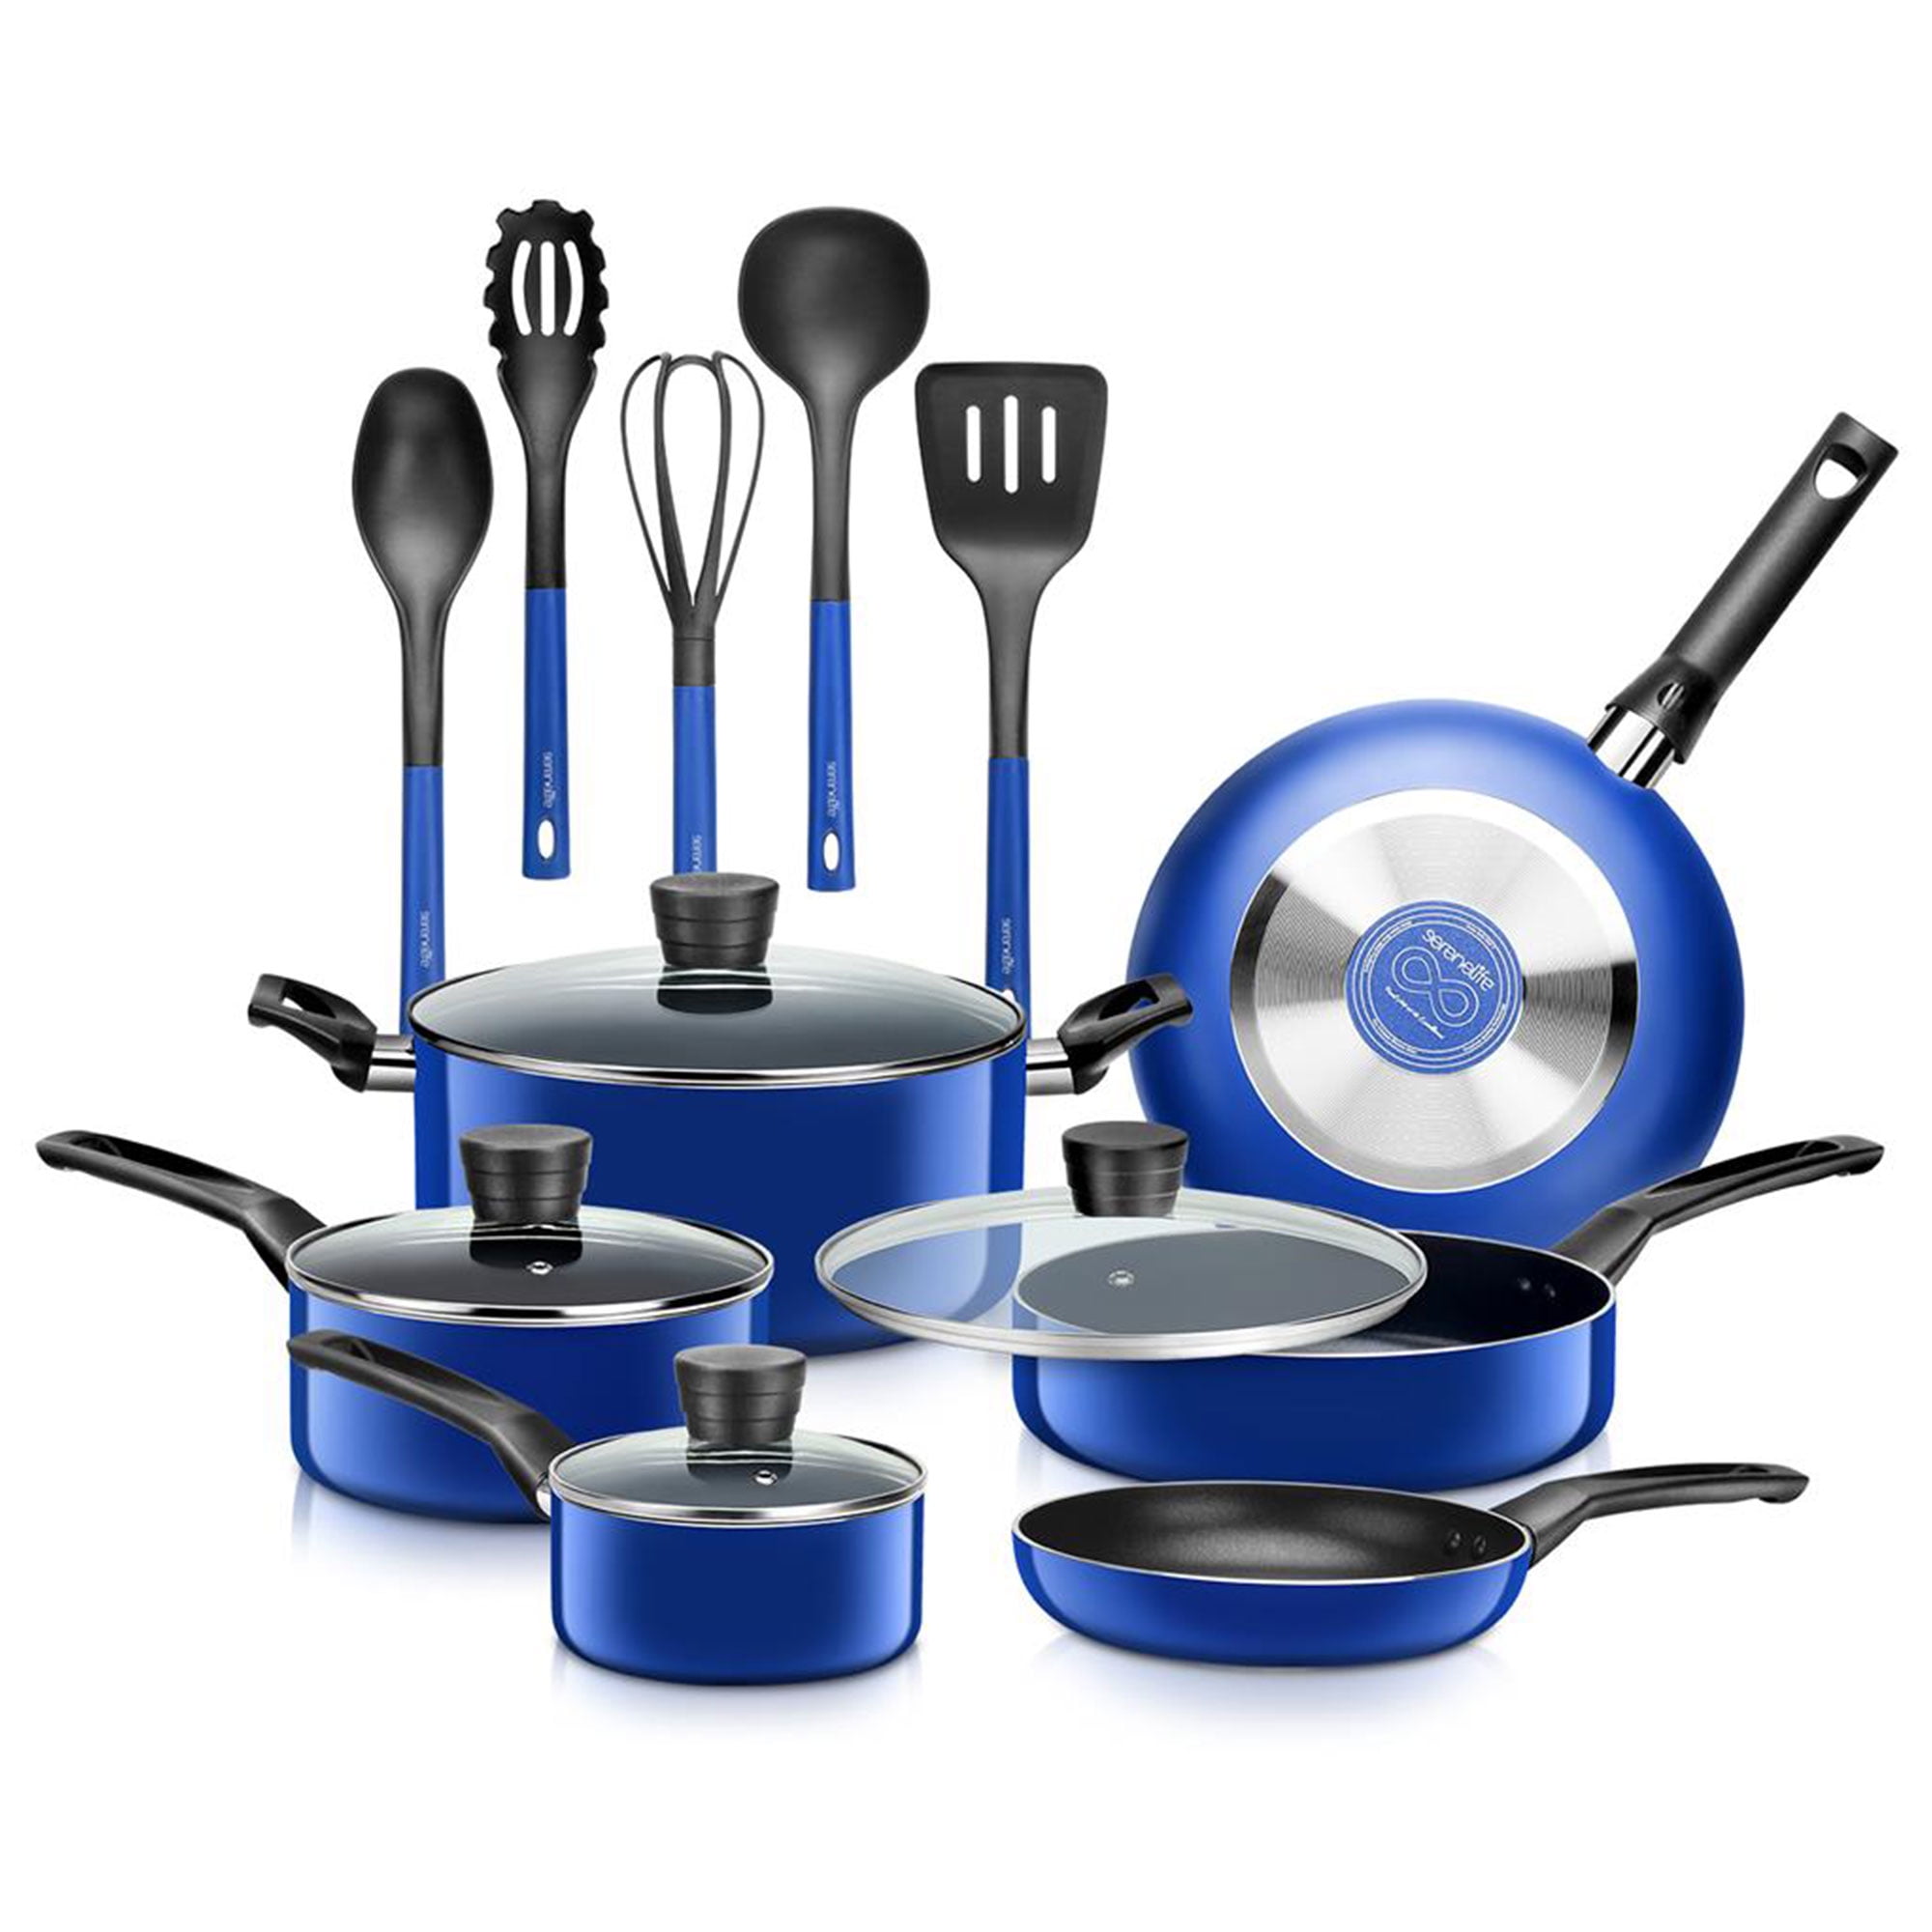 Details about   12-Piece Toxin-Free Ceramic Nonstick Kitchen Cookware Set Cooking Pans Pots 